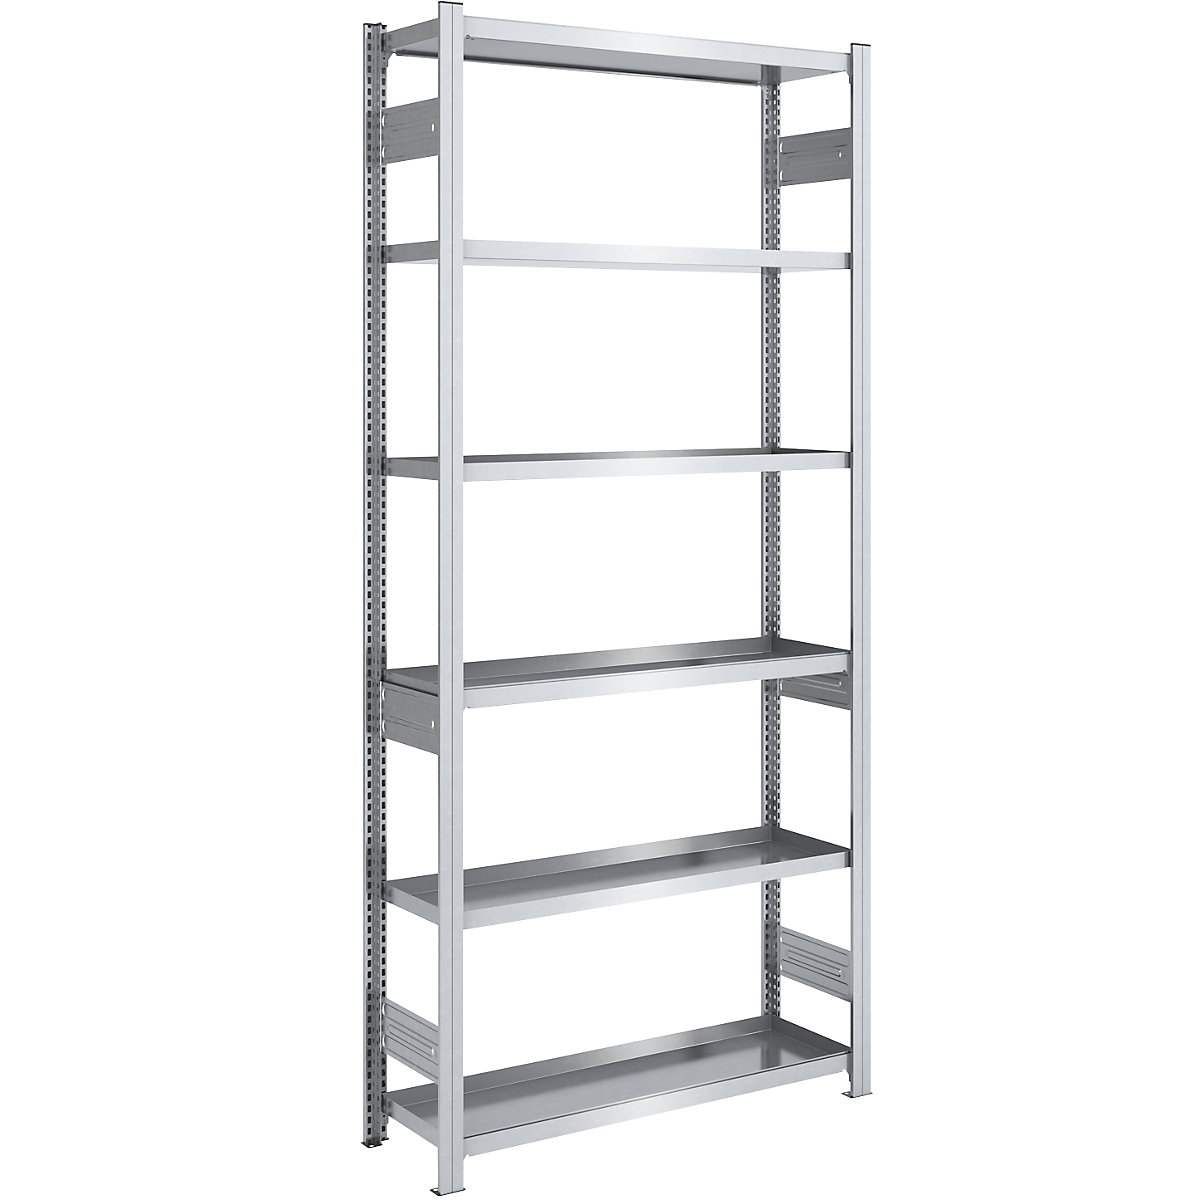 Tray shelf unit – hofe, shelf unit height 2500 mm, tray width 1000 mm, tray depth 400 mm, standard shelf unit